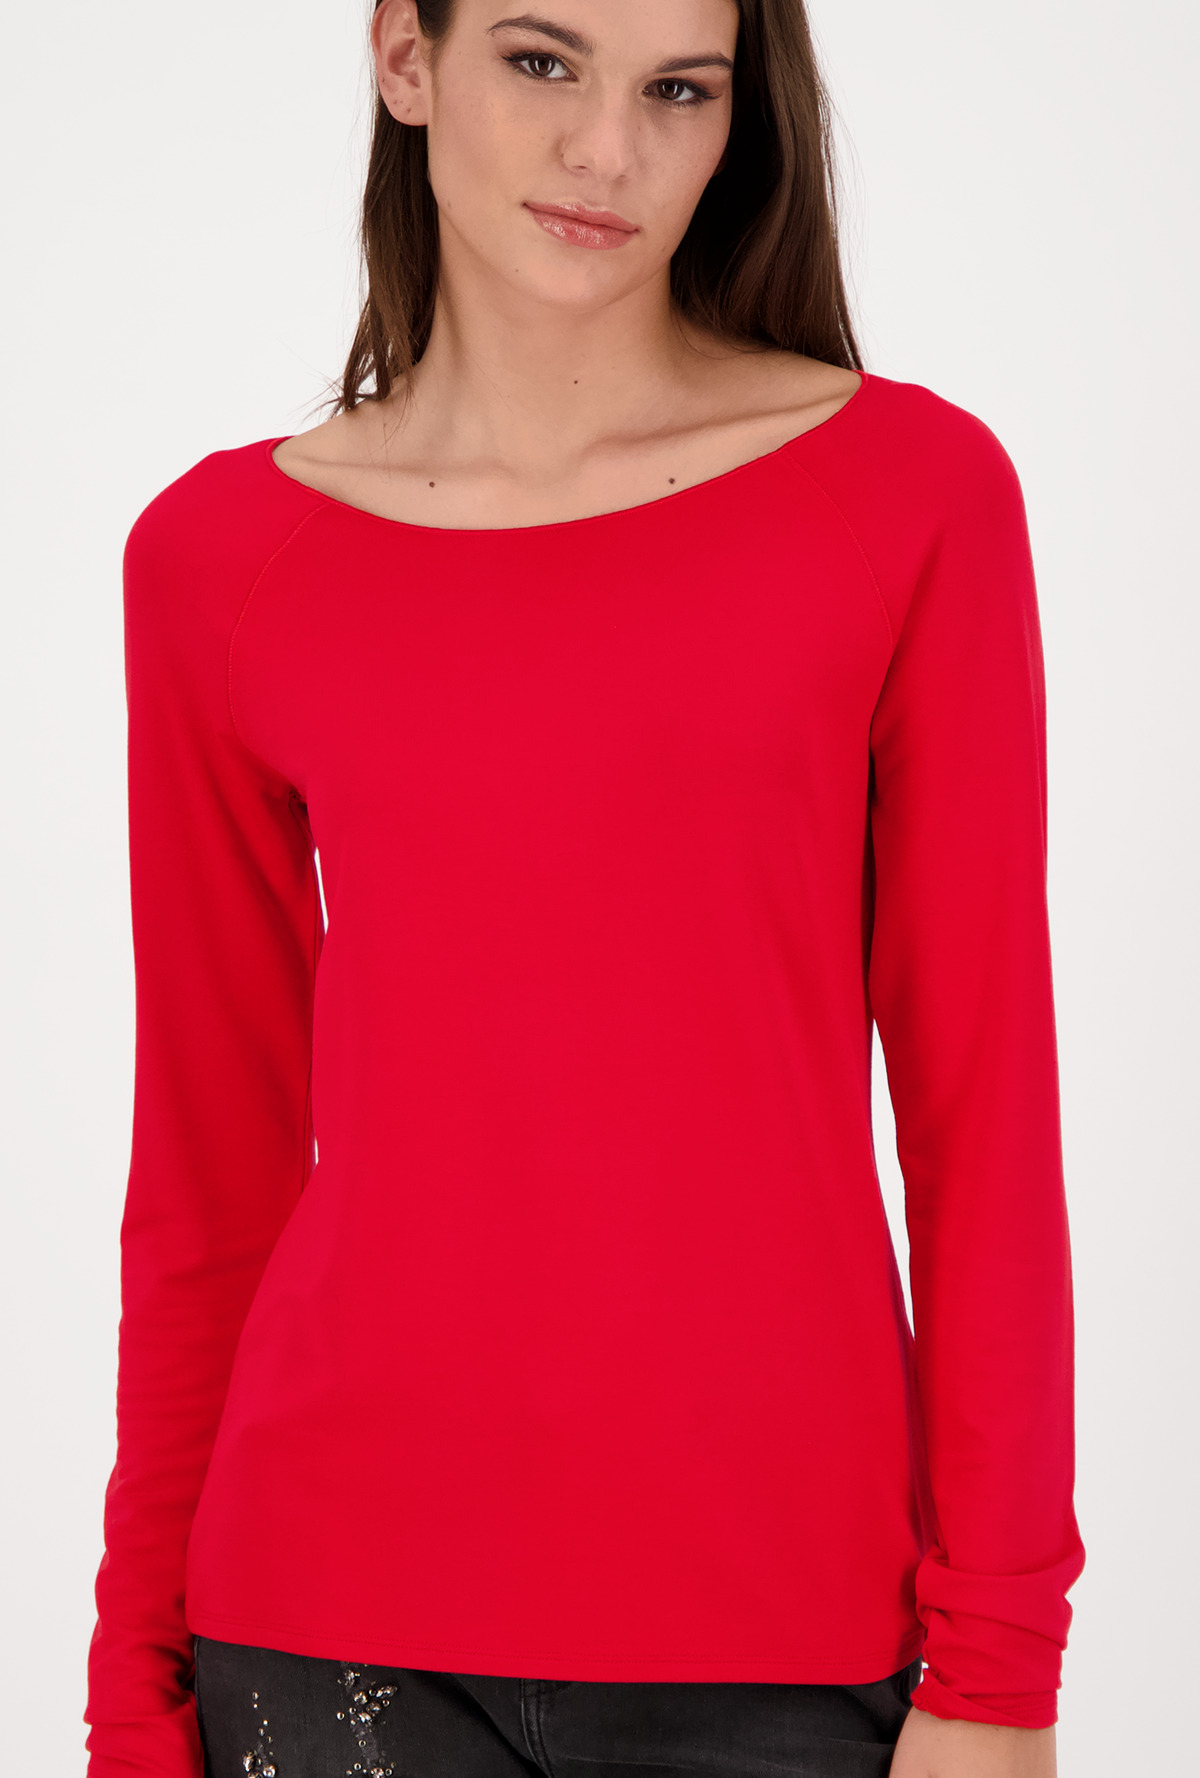 Monari | Shirt Jersey mode mit Rundhals Langarm Unifarbenes weber